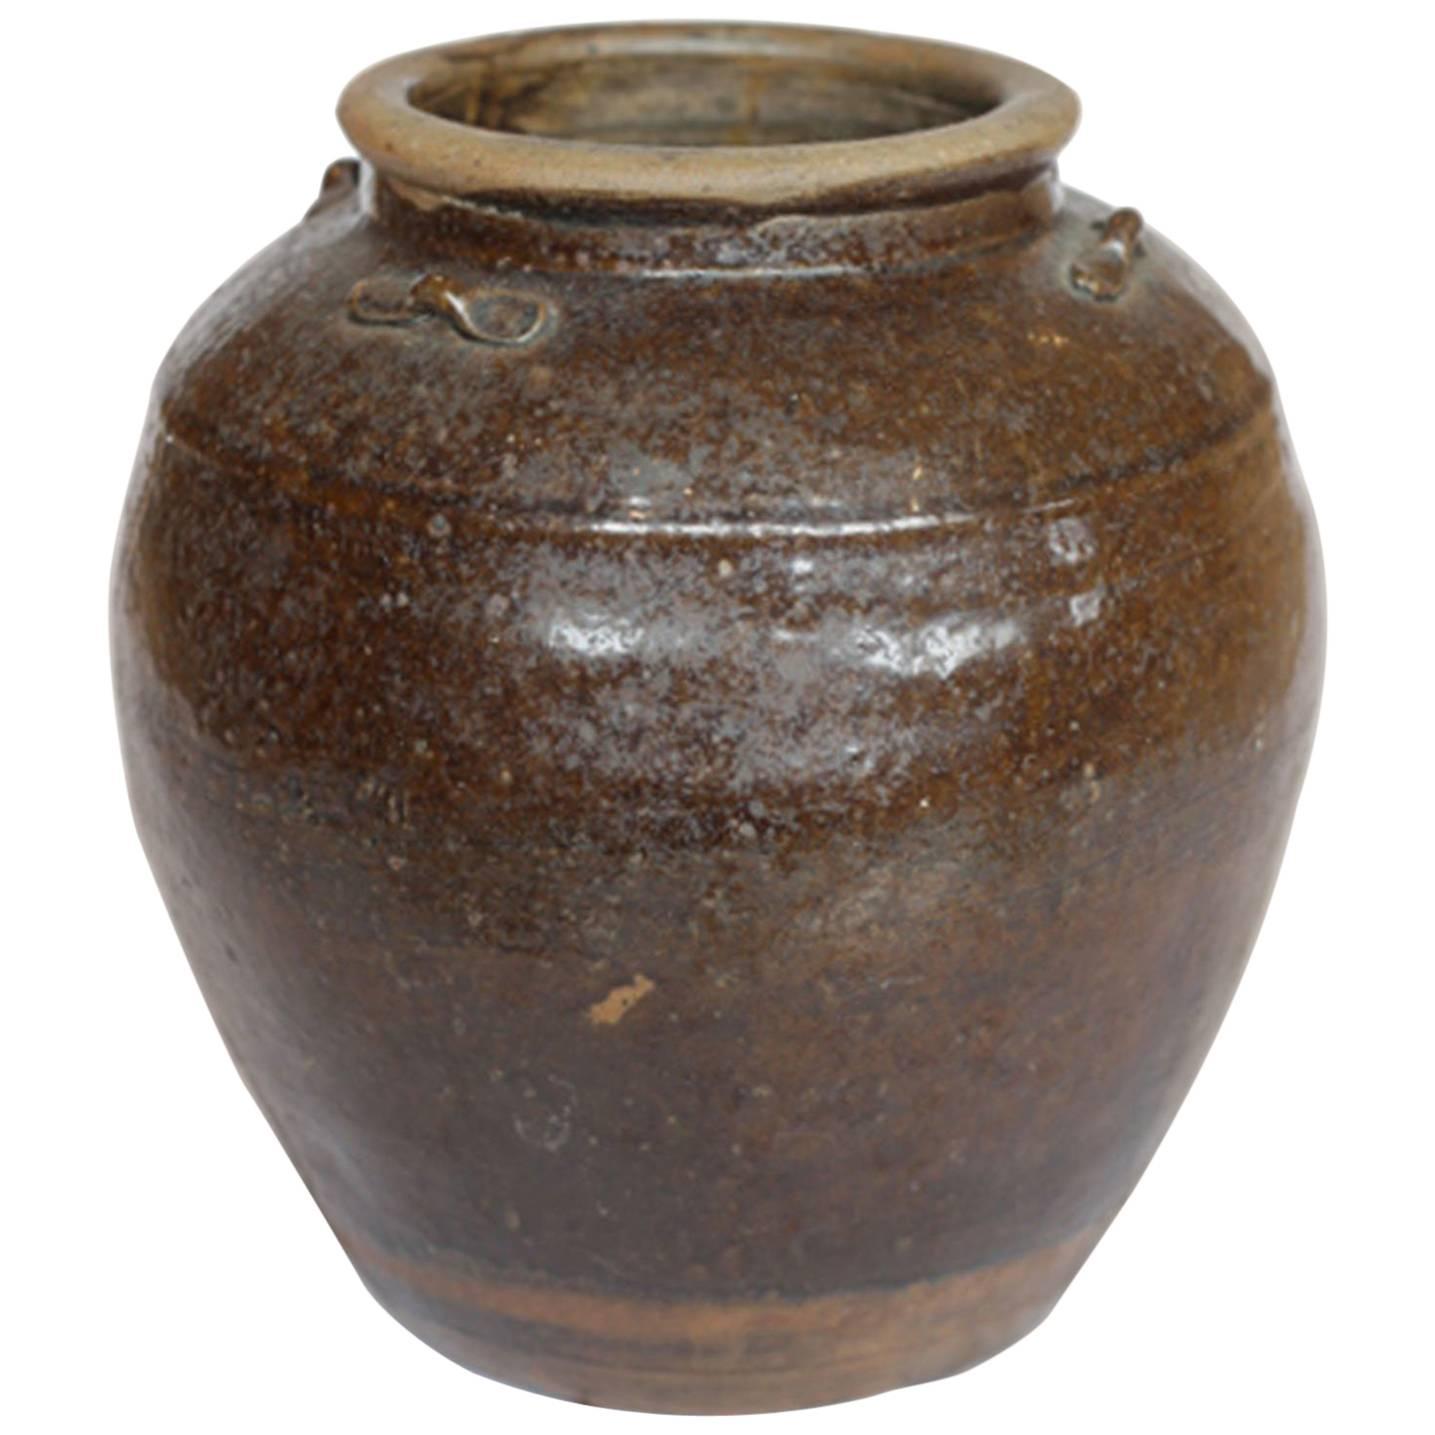 19th Century South East Asia Brown Glazed Pottery Storage Jar, circa 1800s